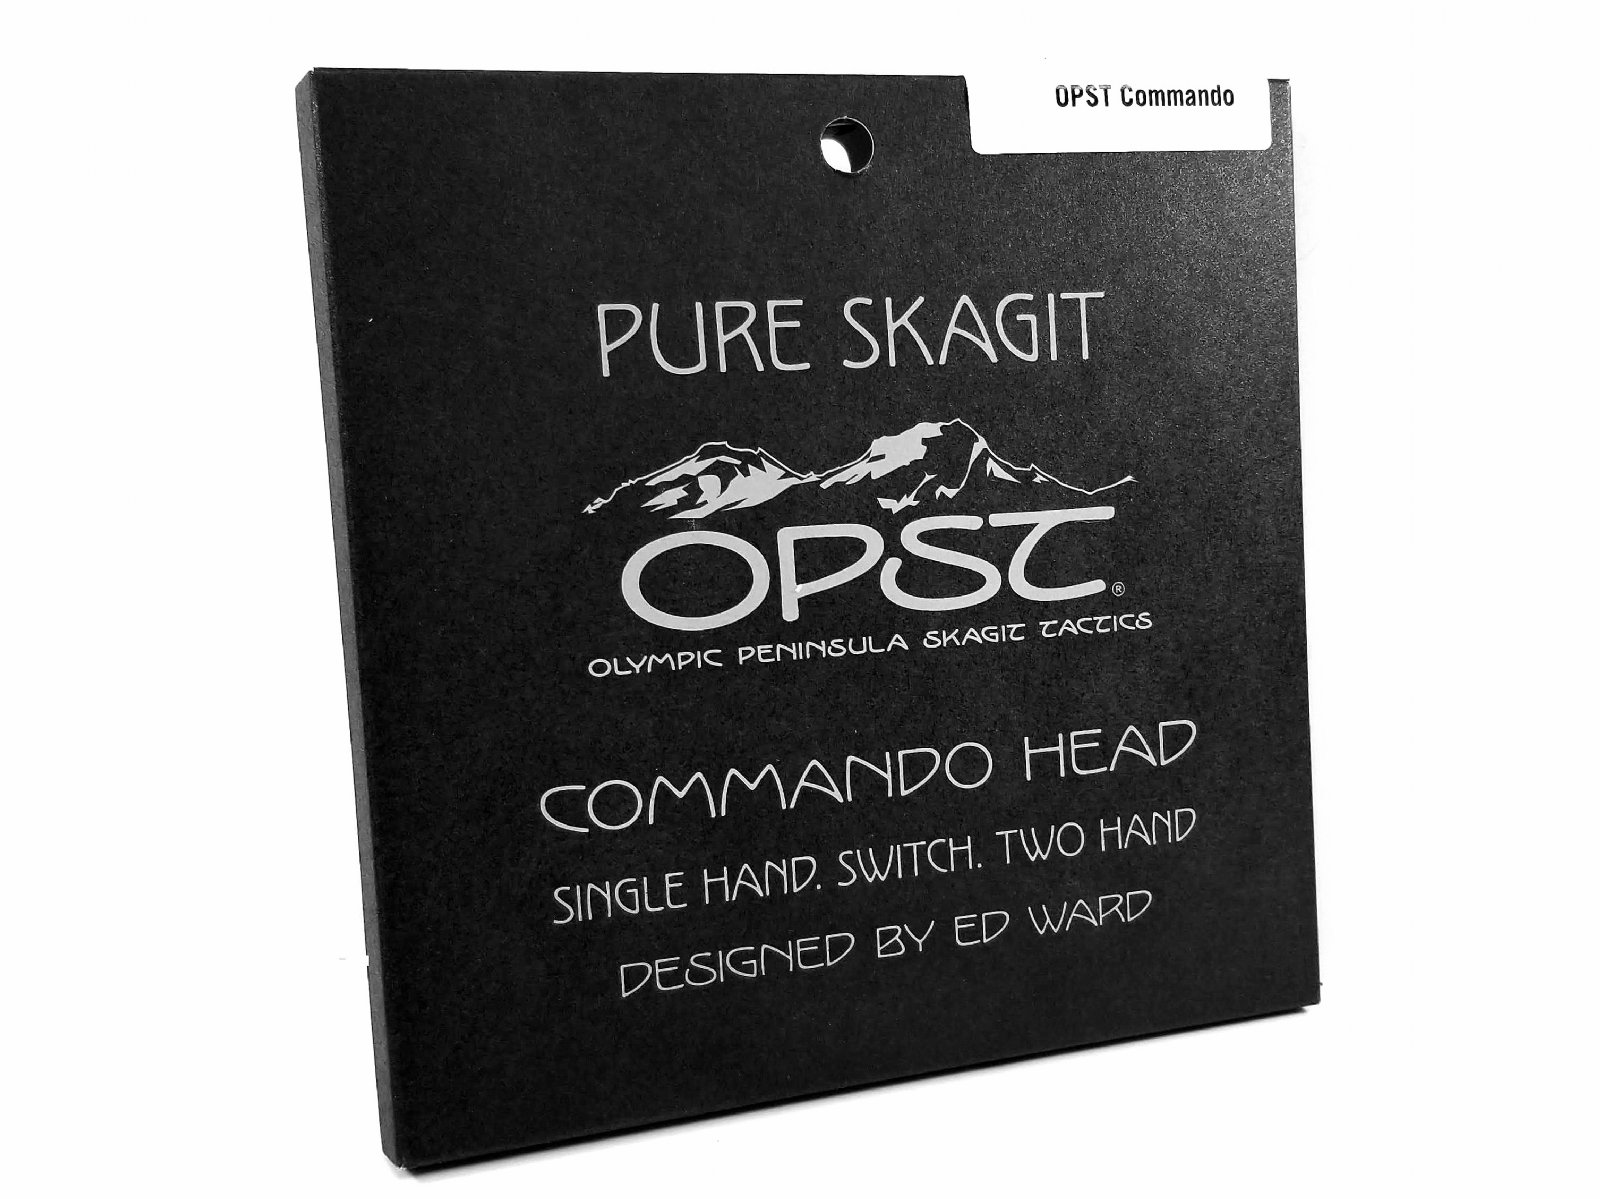 OPST Pure Skagit Commando Head 